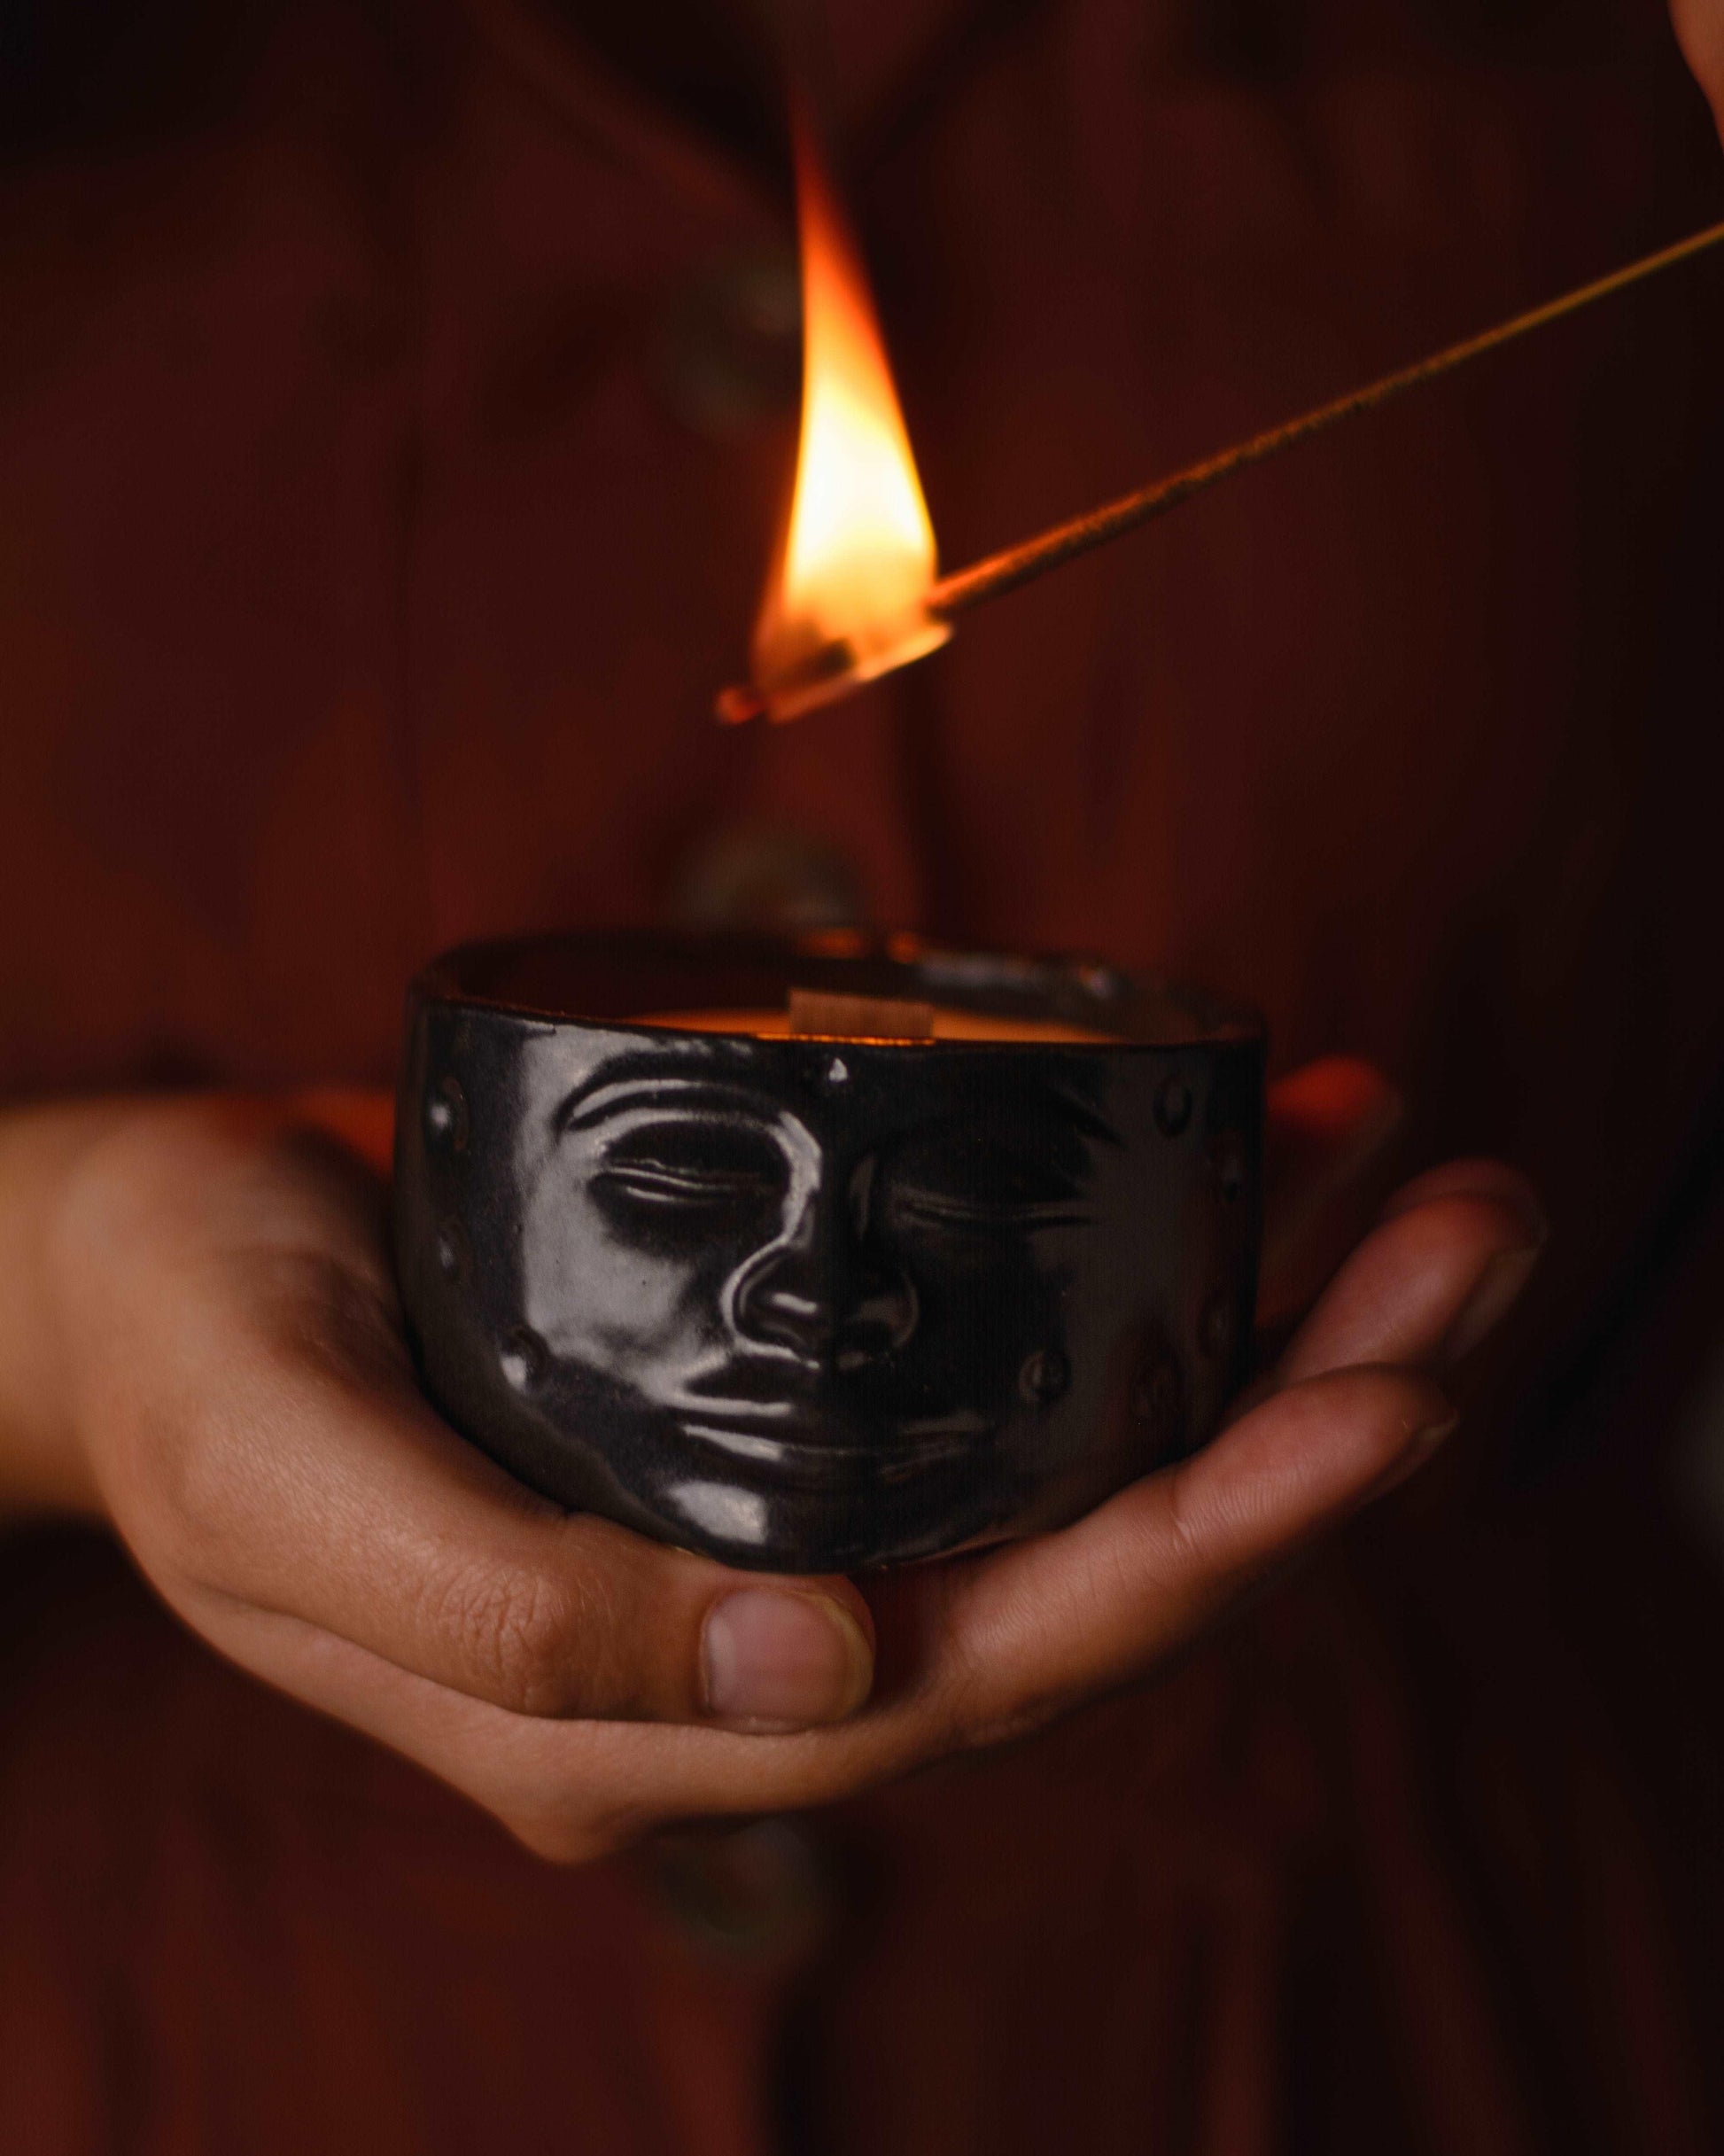 Oberon Moon Jar Candle - Scented, Black color